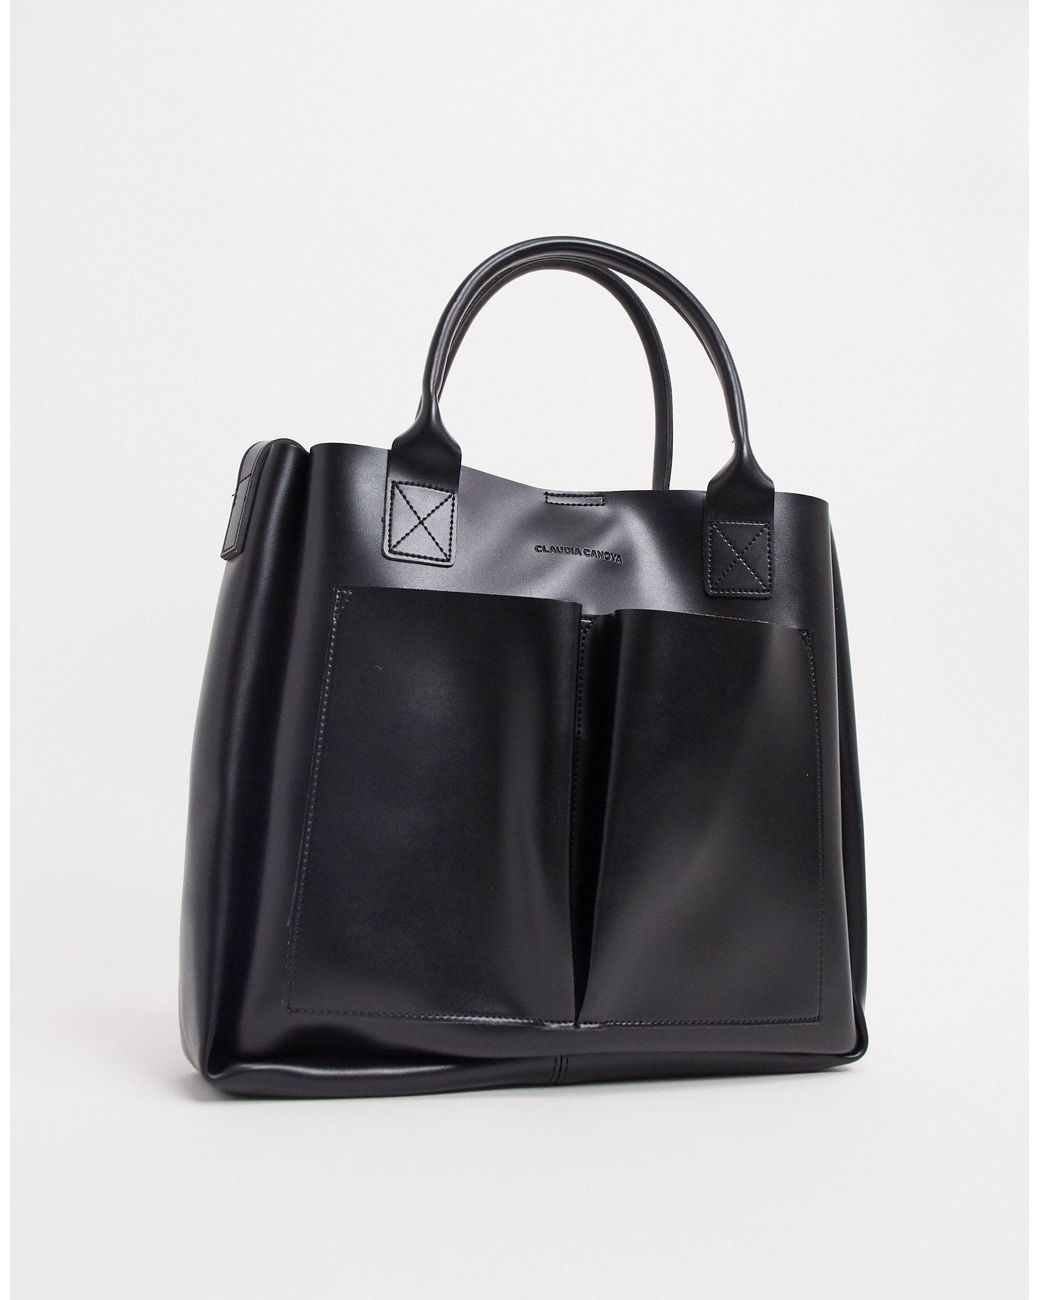 Claudia Canova Double Pocket Tote Bag in Black | Lyst Australia